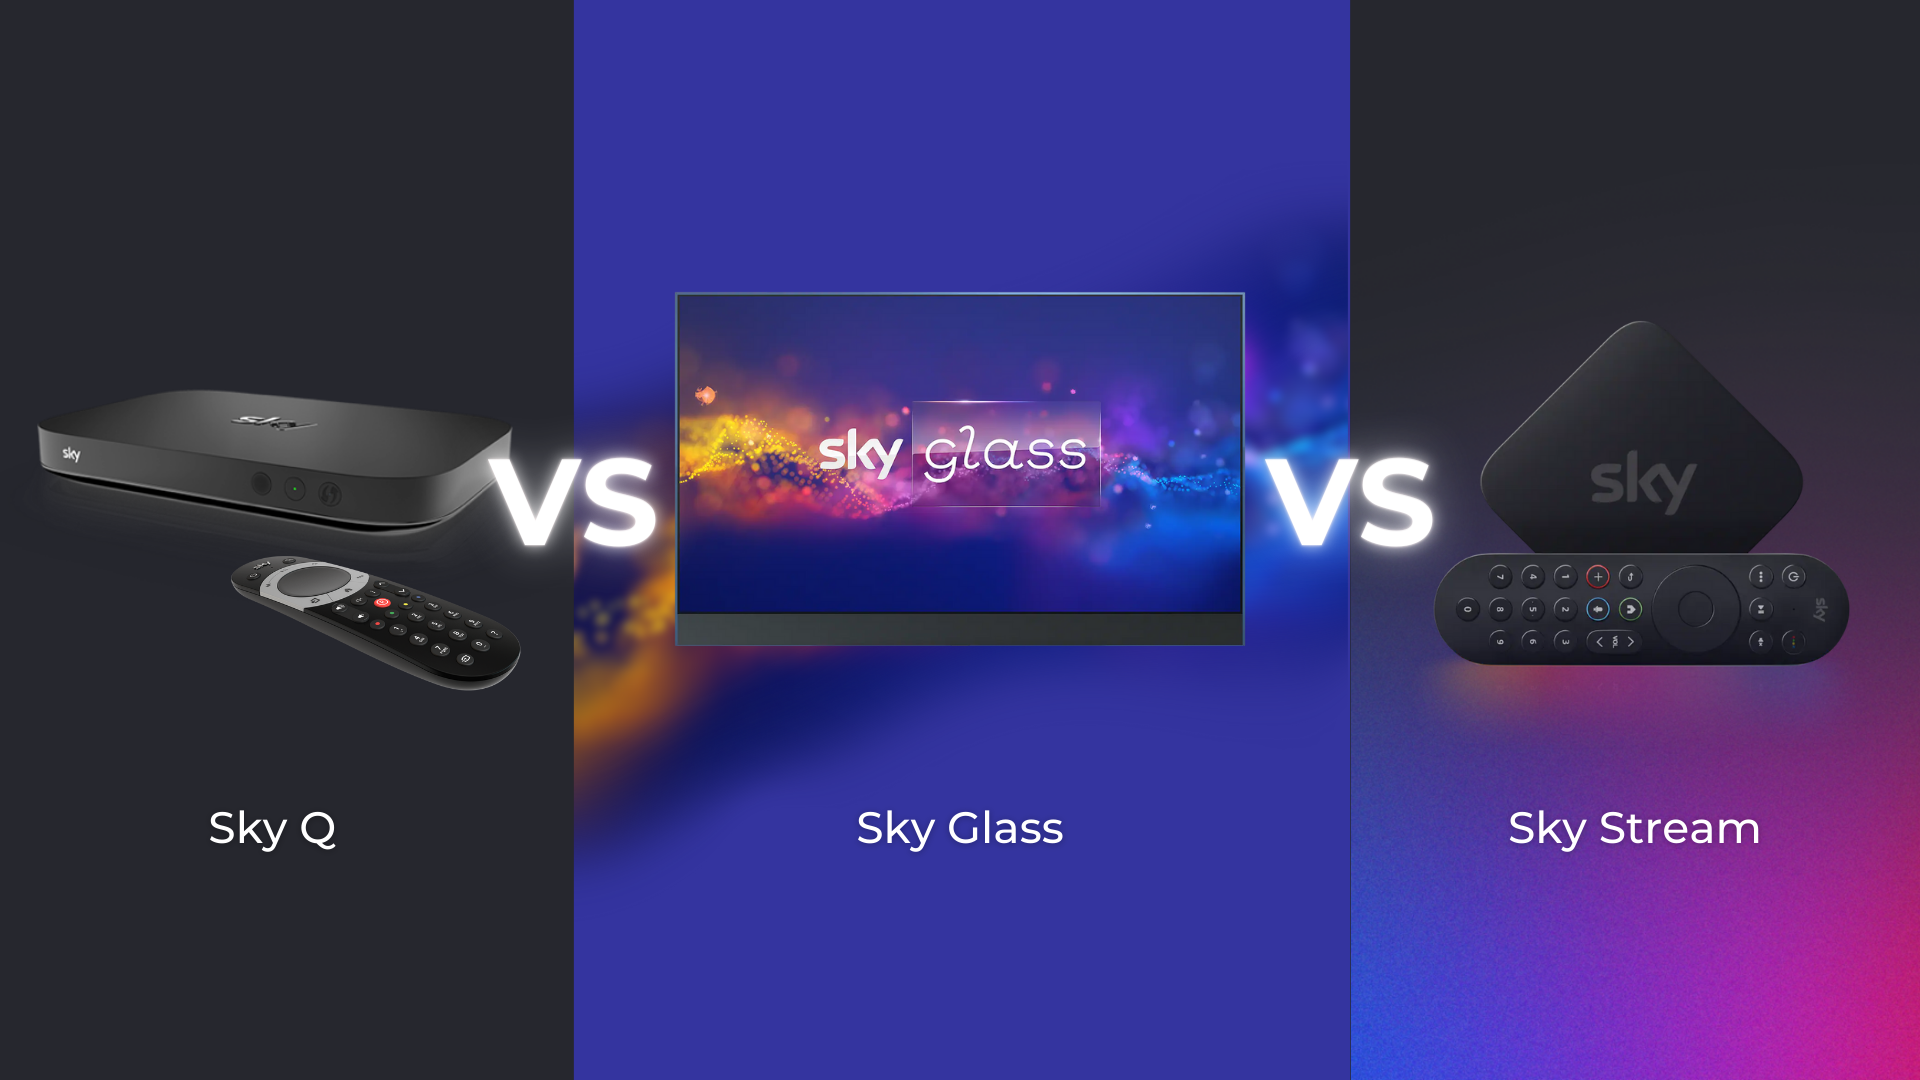 Sky Q vs Sky Glass vs Sky Stream